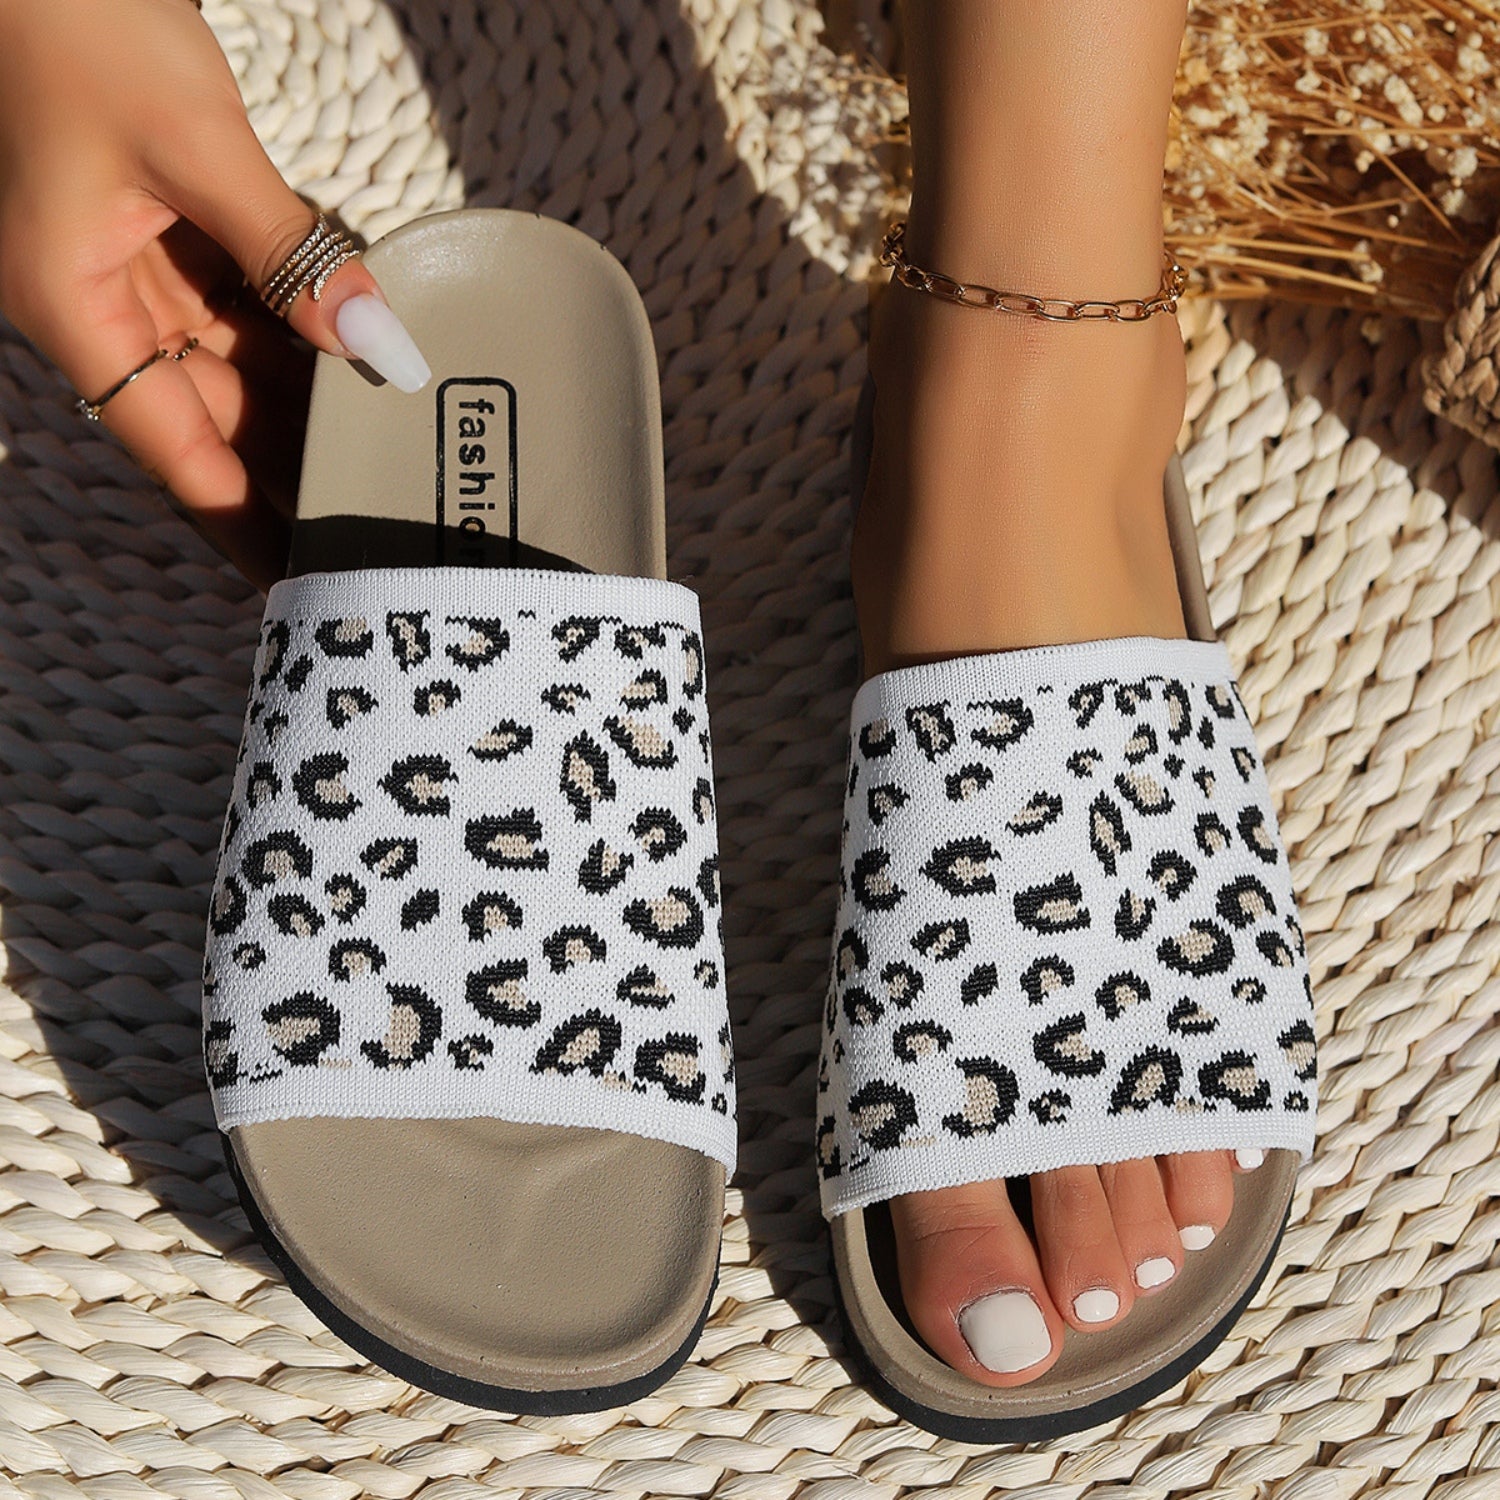 Leopard Open Toe Sandals - GemThreads Boutique Leopard Open Toe Sandals